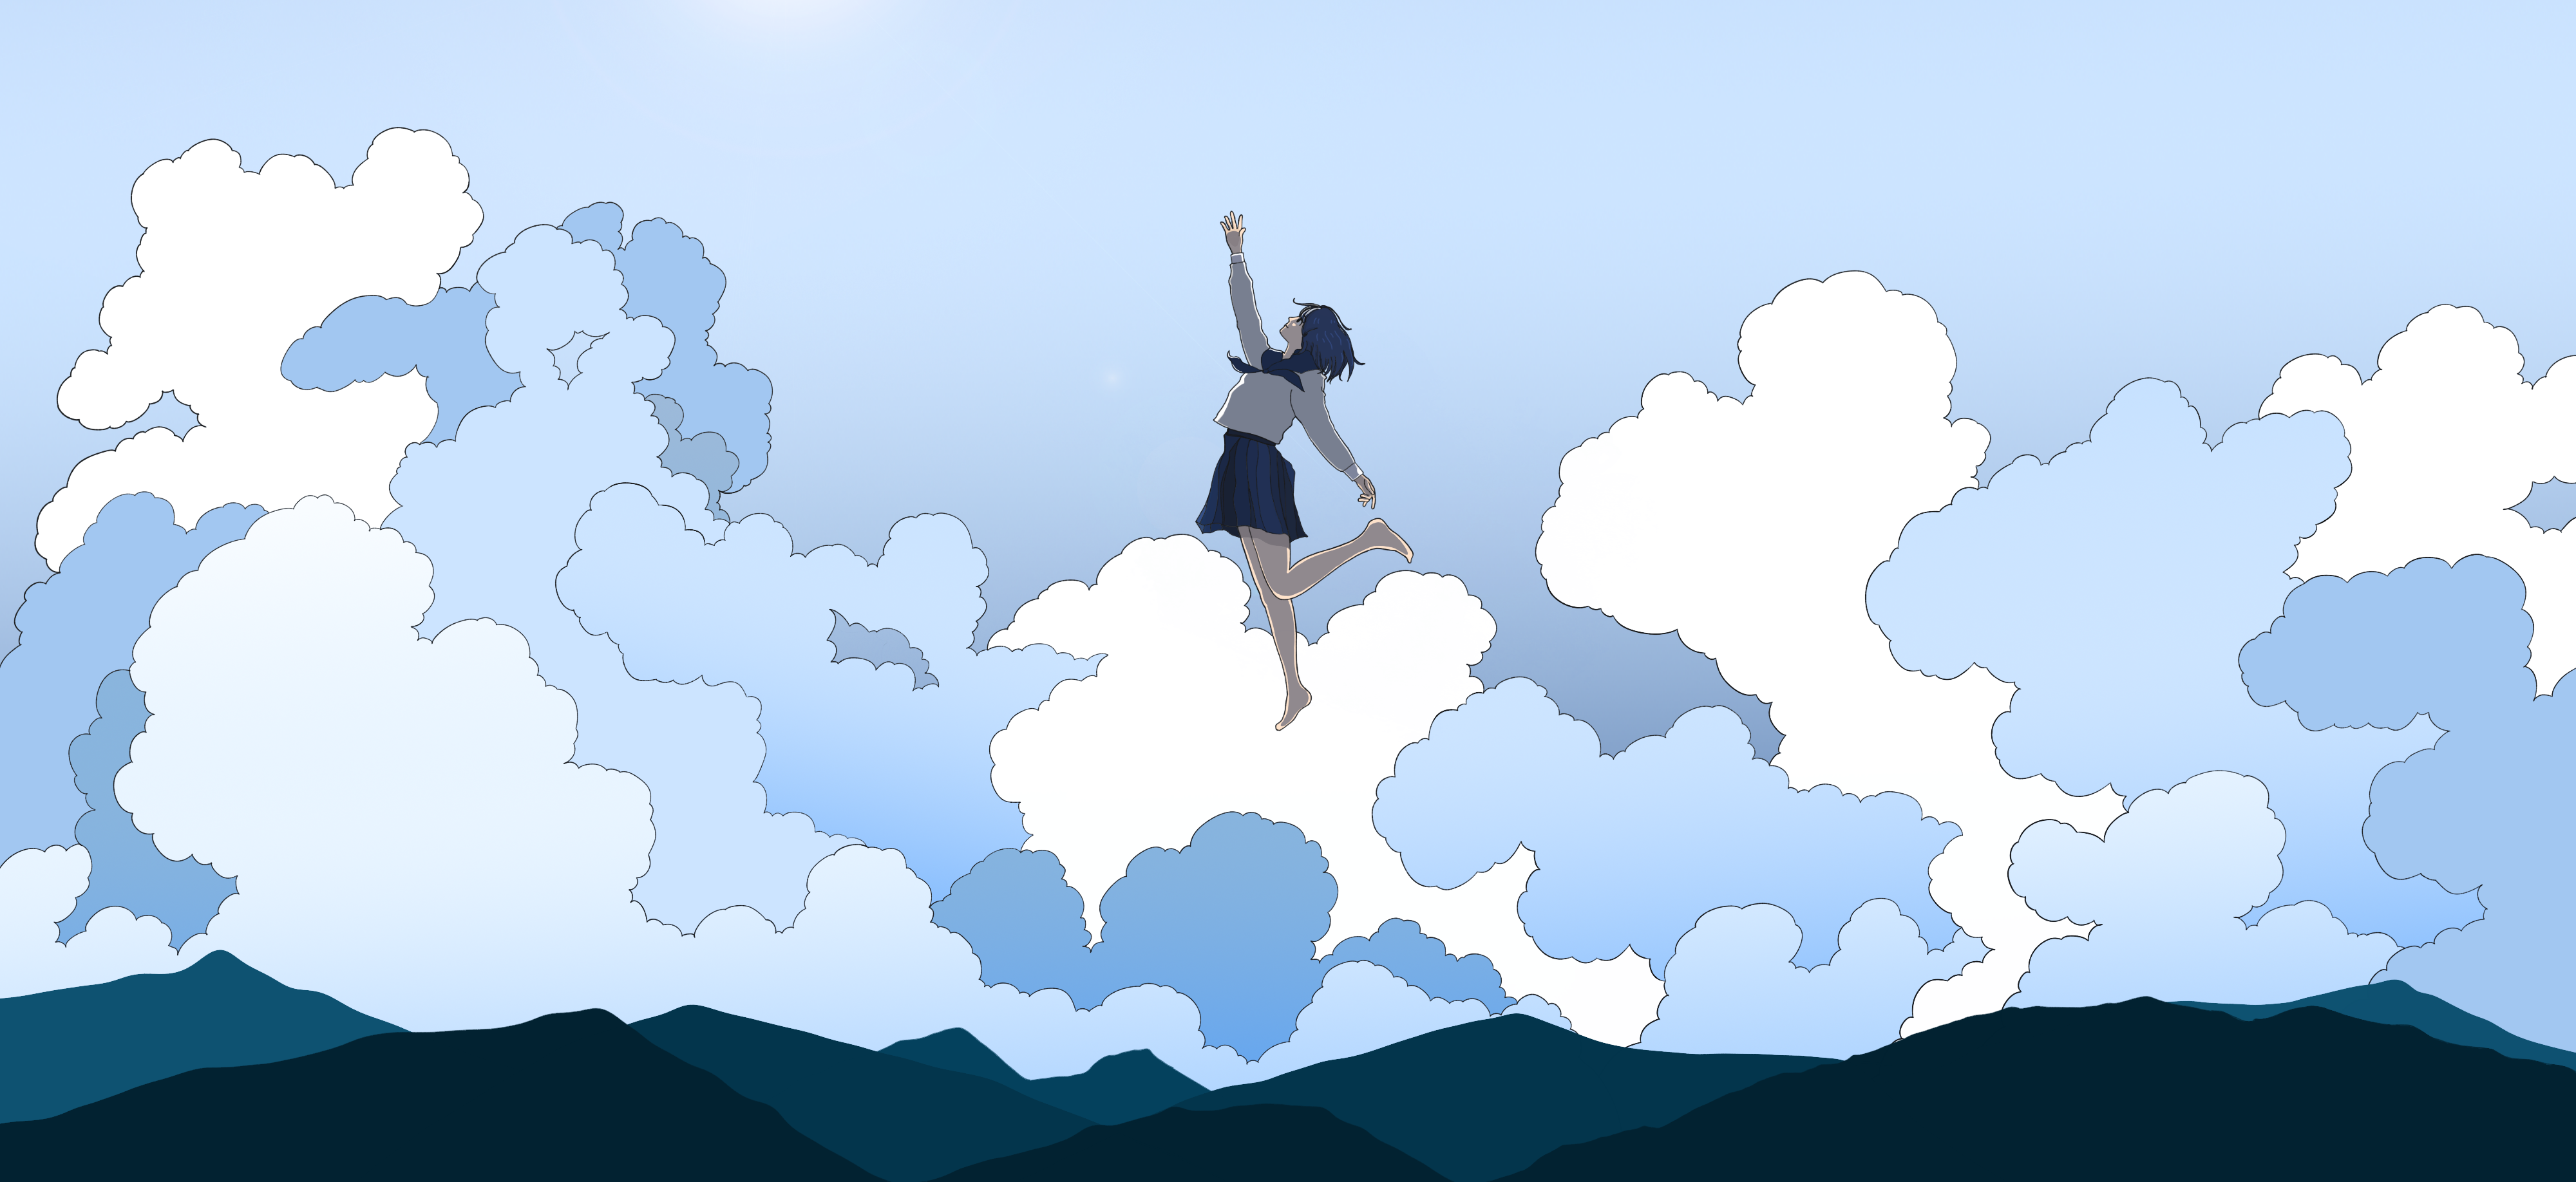 Digital Art Artwork Illustration Clouds Women Mountains School Uniform Sky Schoolgirl Jumping 4000x1836